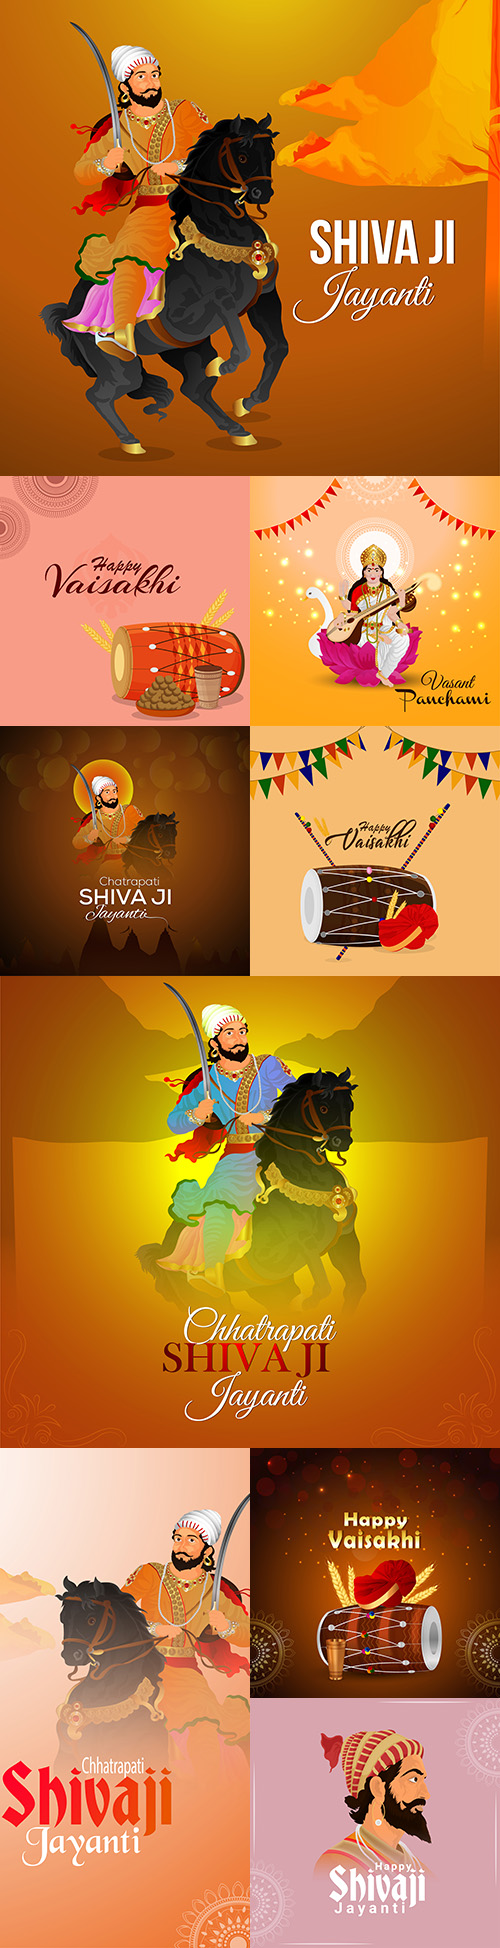 Shivaji Jayanti and Vasant Panchami illustration day celebration